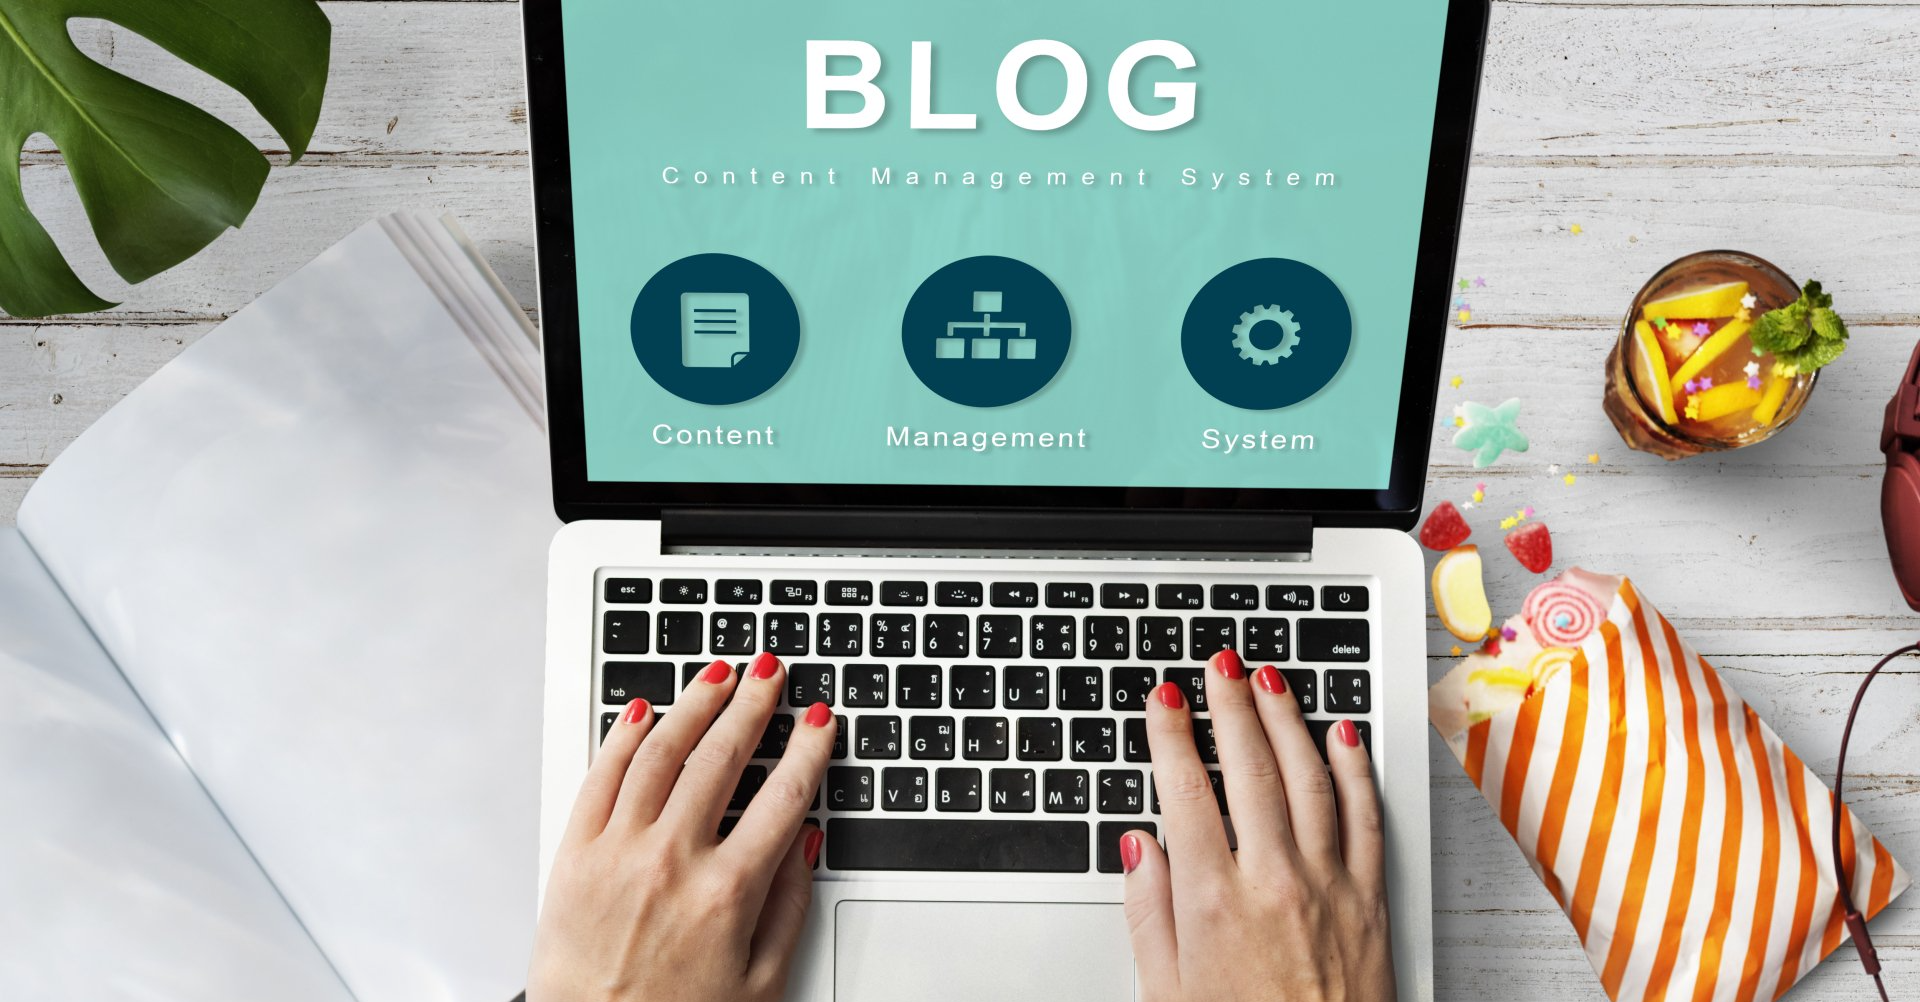 Blog content management system